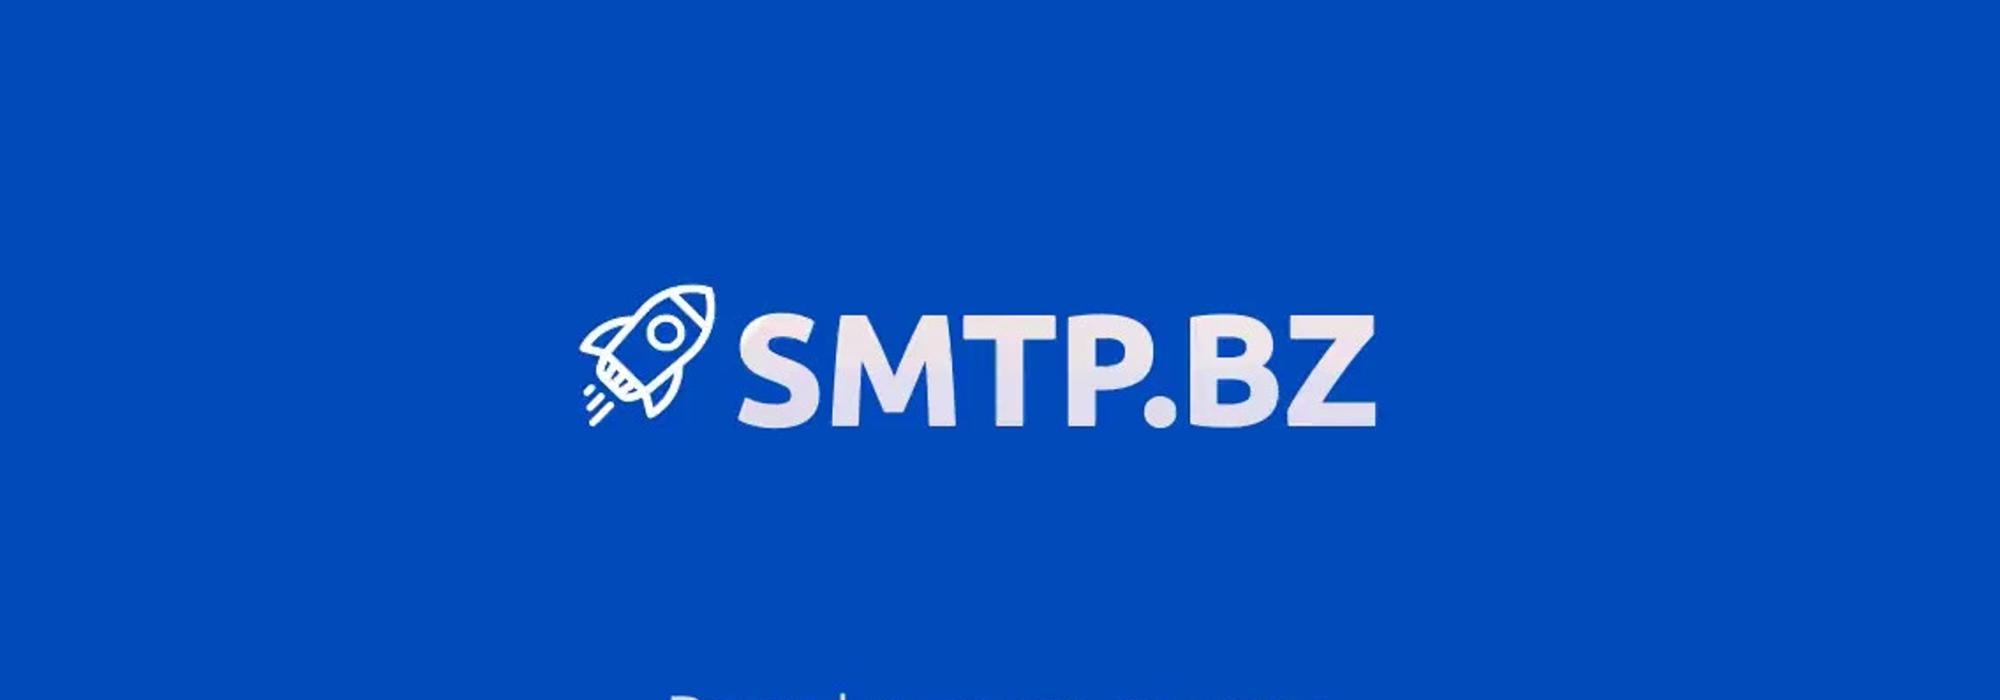 SMTP.BZ